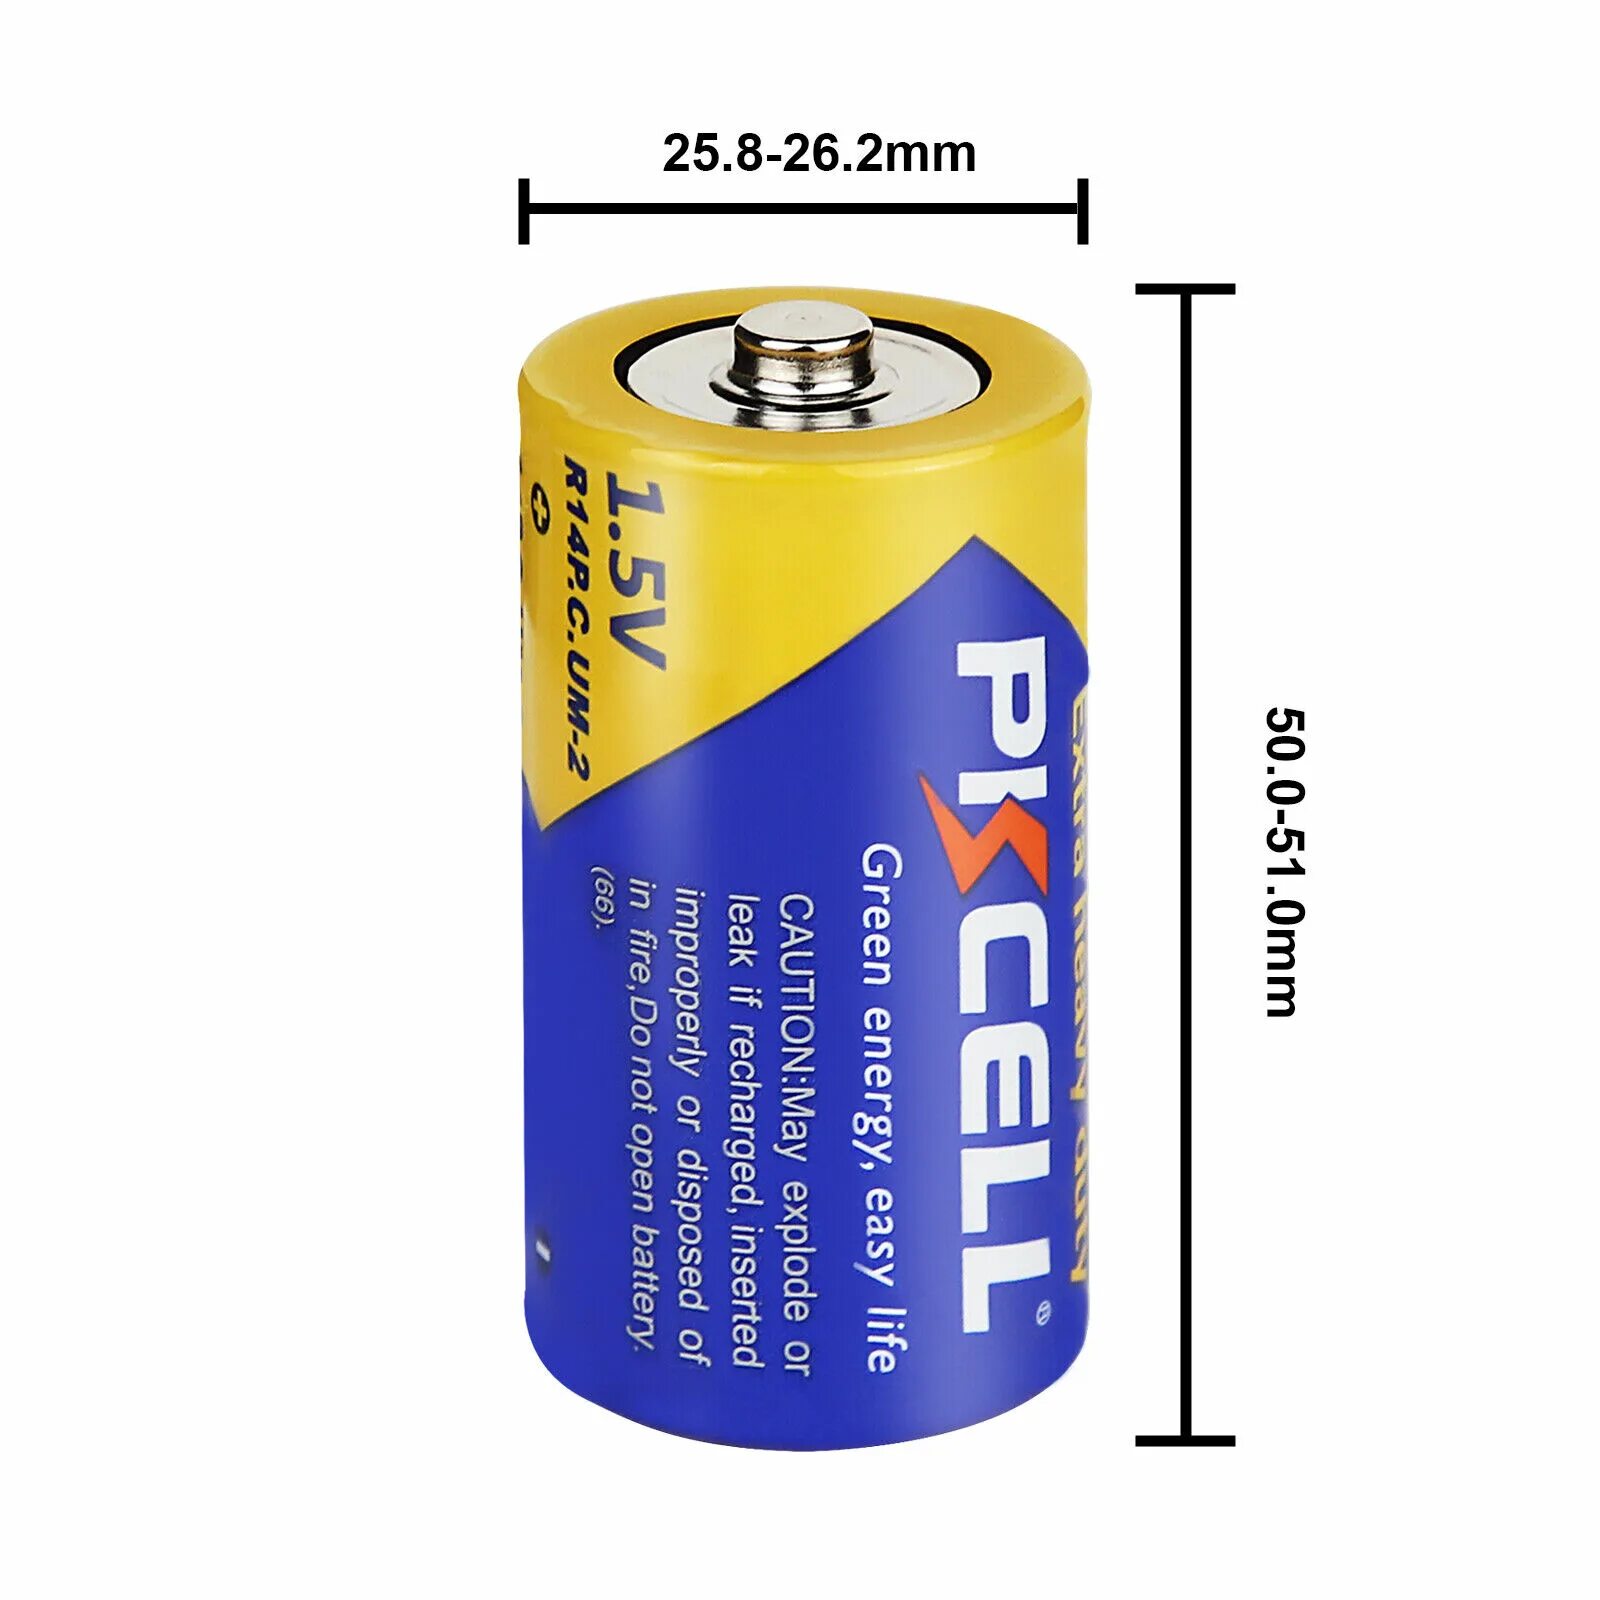 C batteries. Батарейки um2 c Size 1.5 v. Um2 с-Size батарейка. Батарейка 5v/1.5a. Батарейка размер c 1.5v.